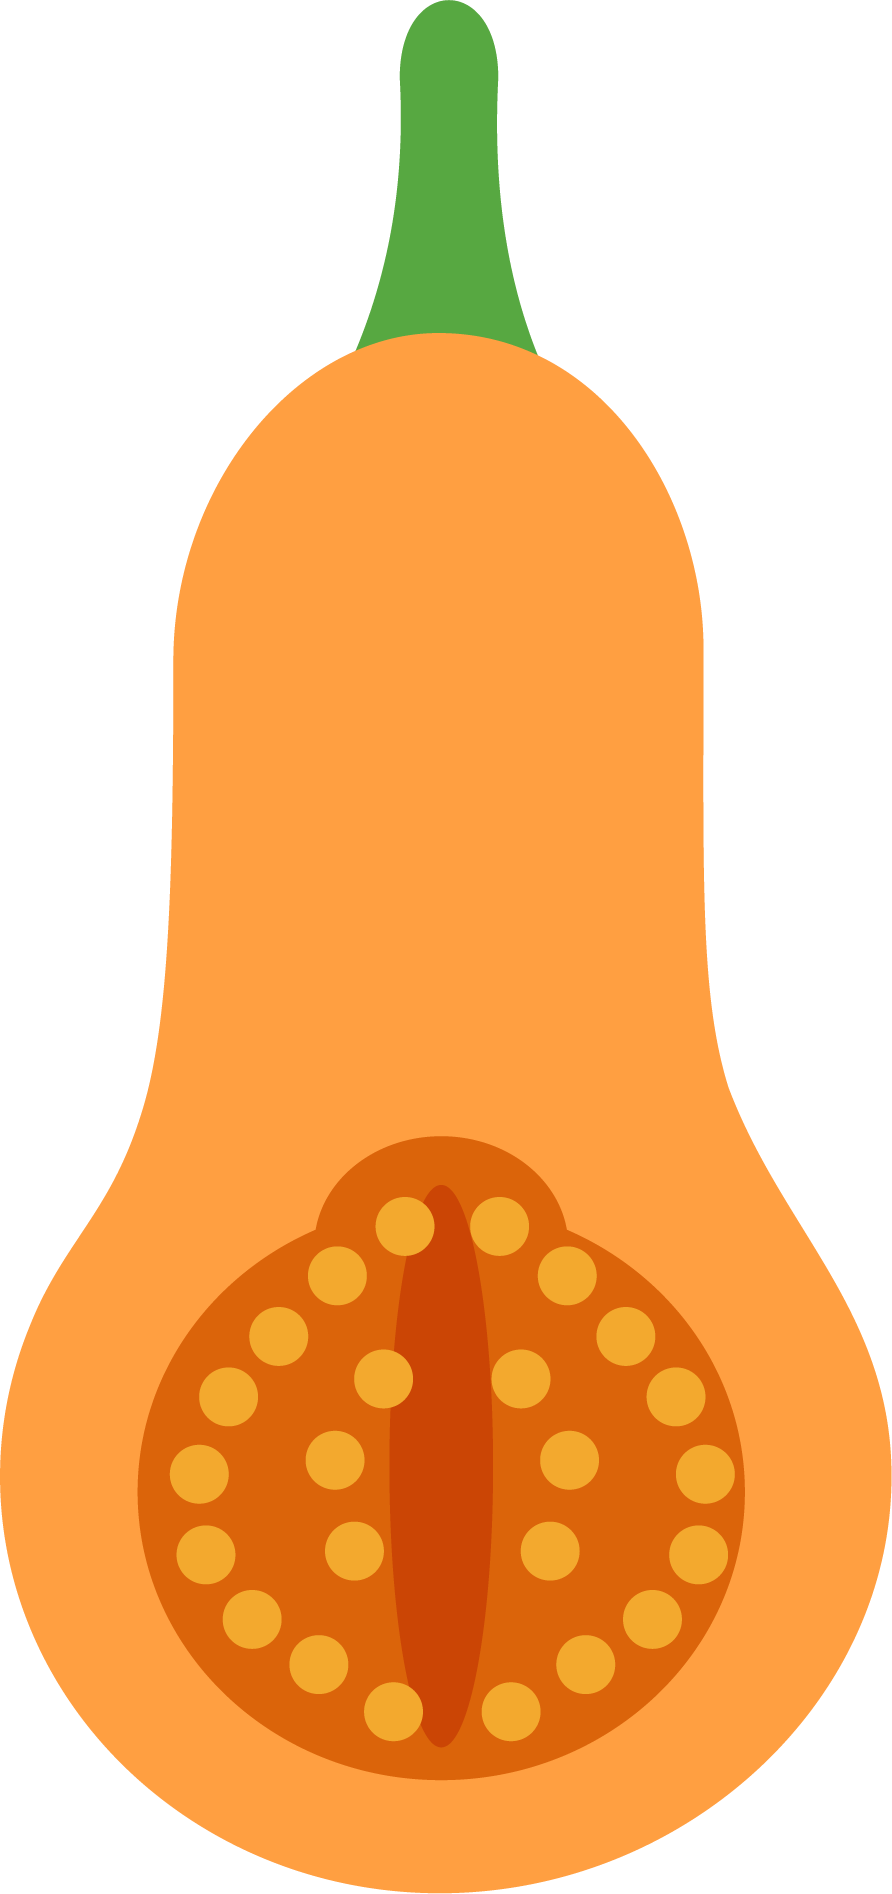 butternut squash icon